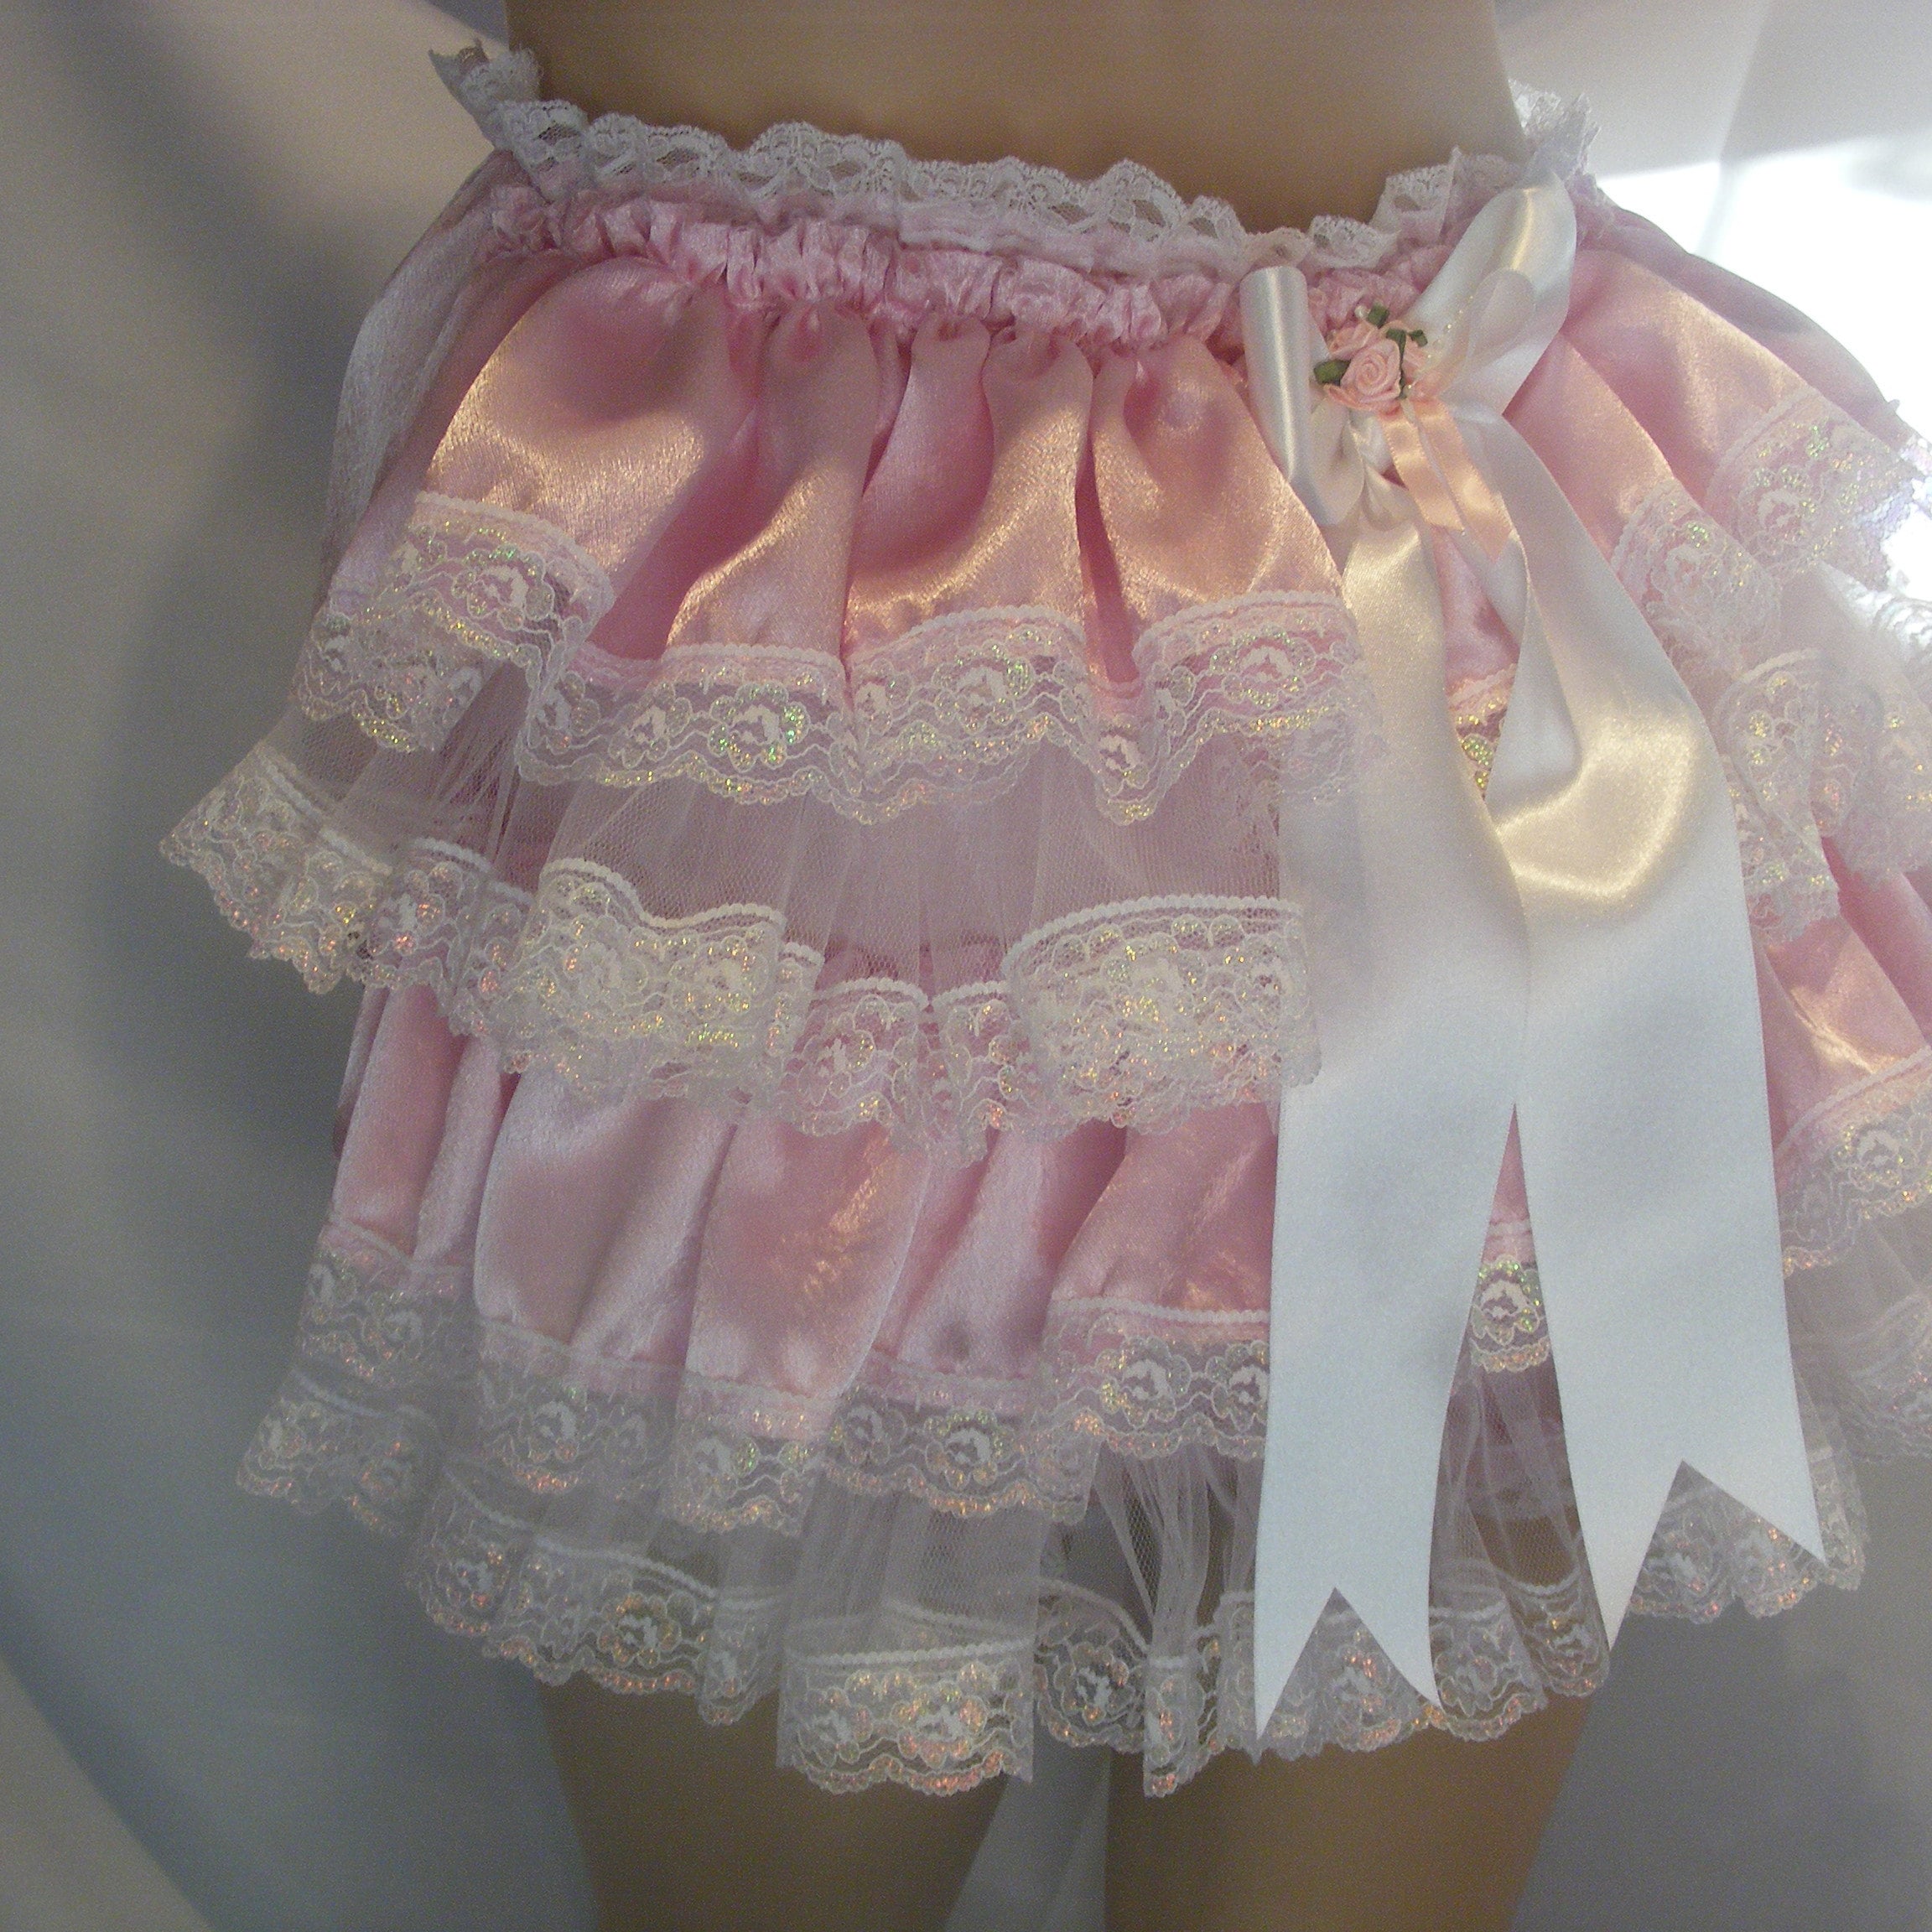 Details about   ADULT BABY SISSY BONNET soft pink fleece  COSPLAY  LOLITA FANCYDRESS ROLPLAY